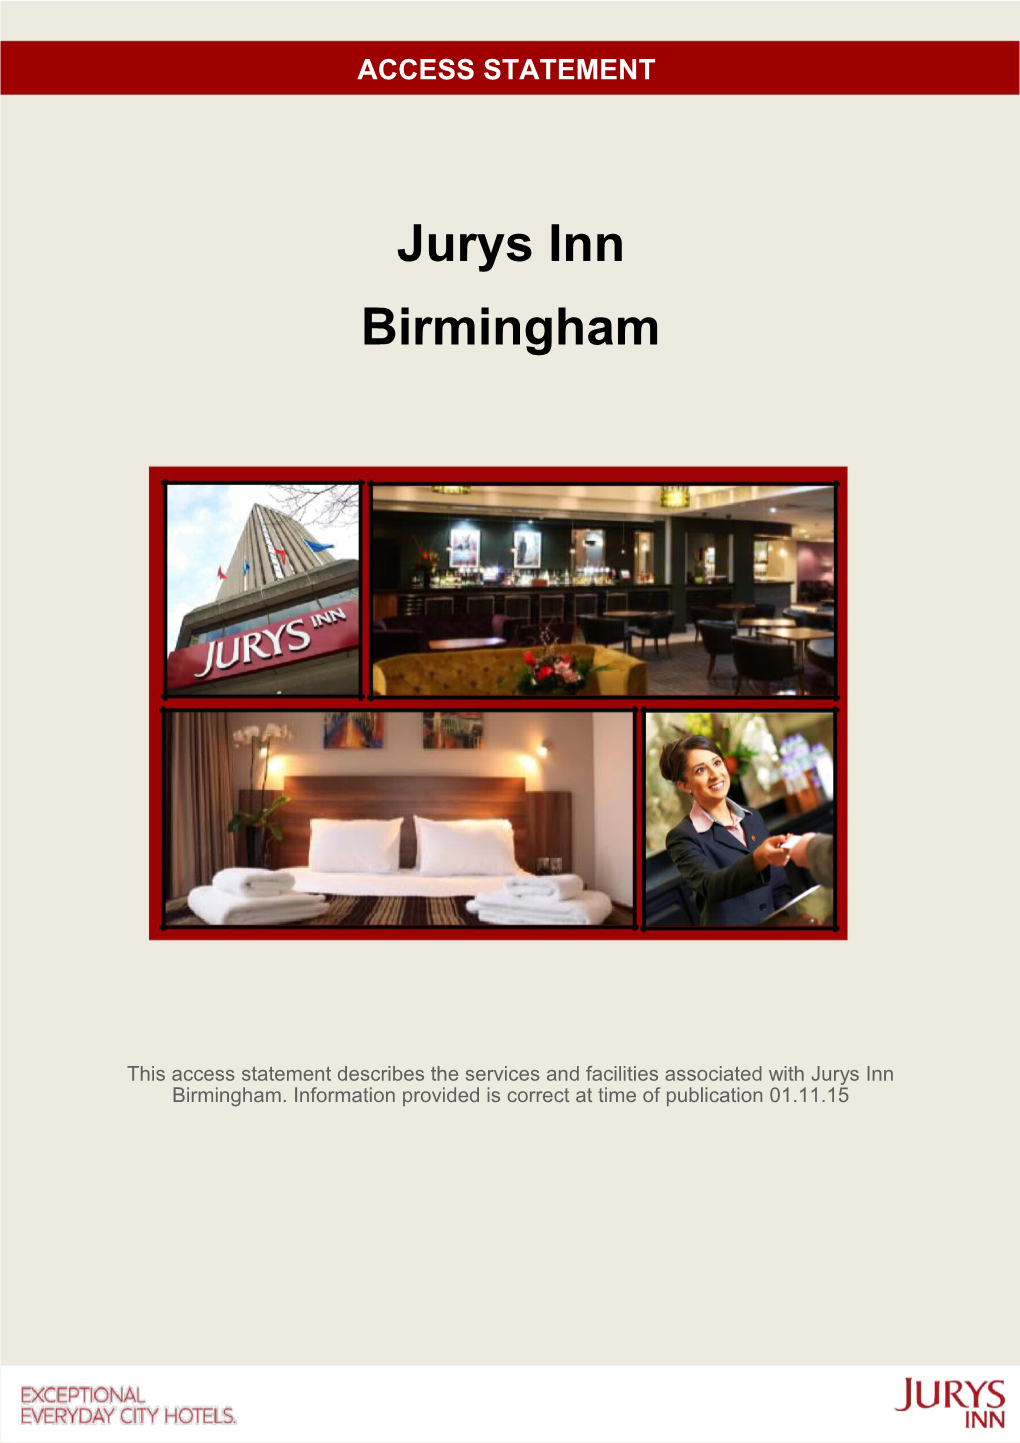 Address:Jurys Inn Birmingham